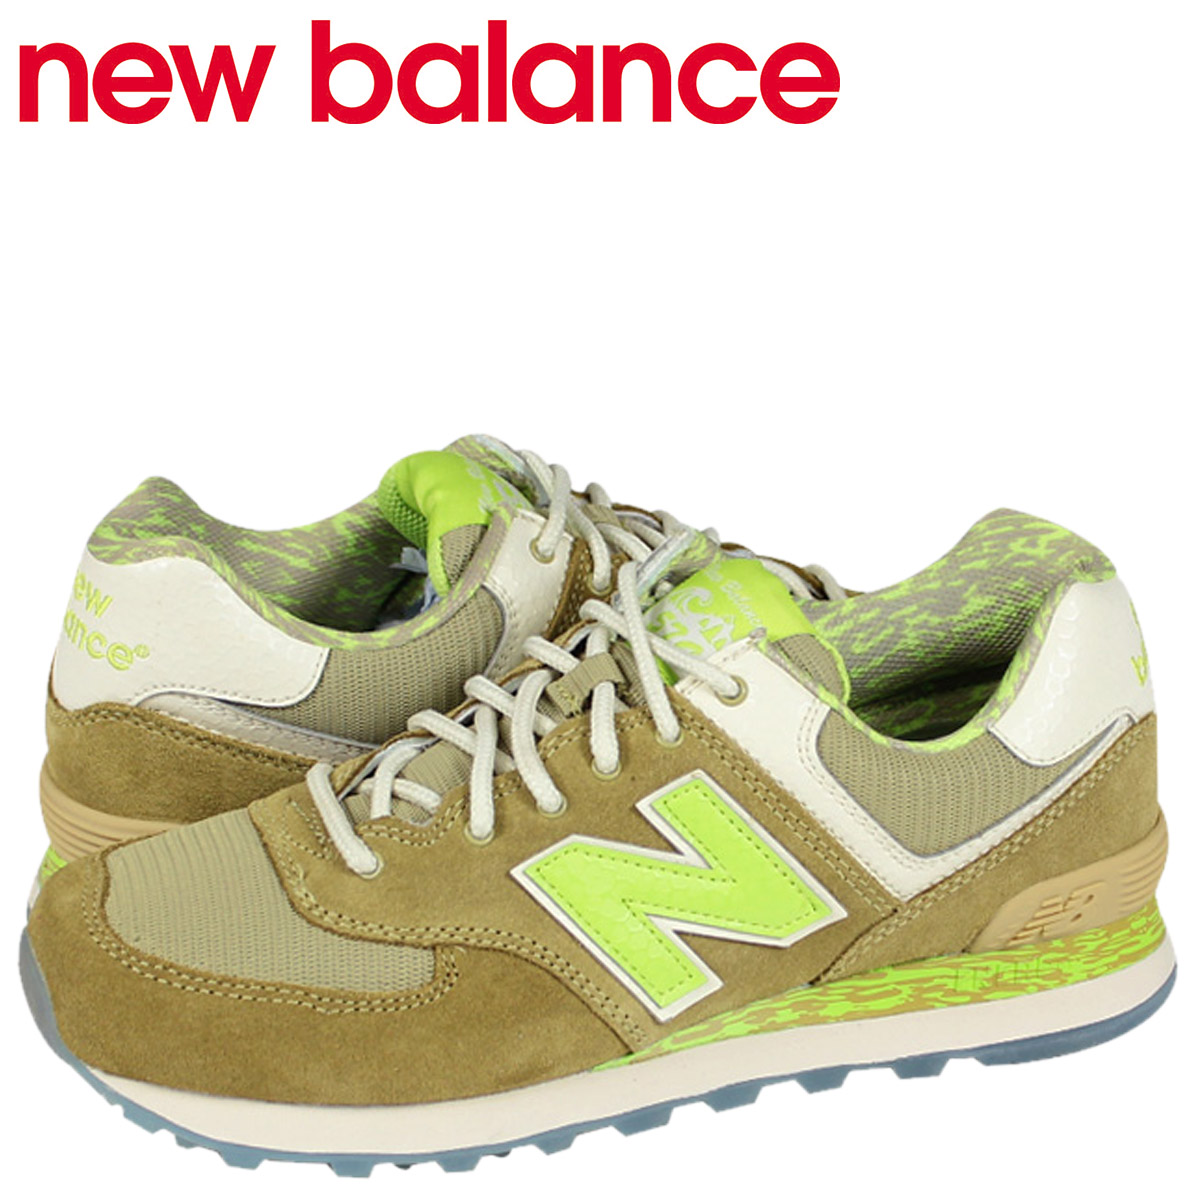 new balance shoes 574 mens